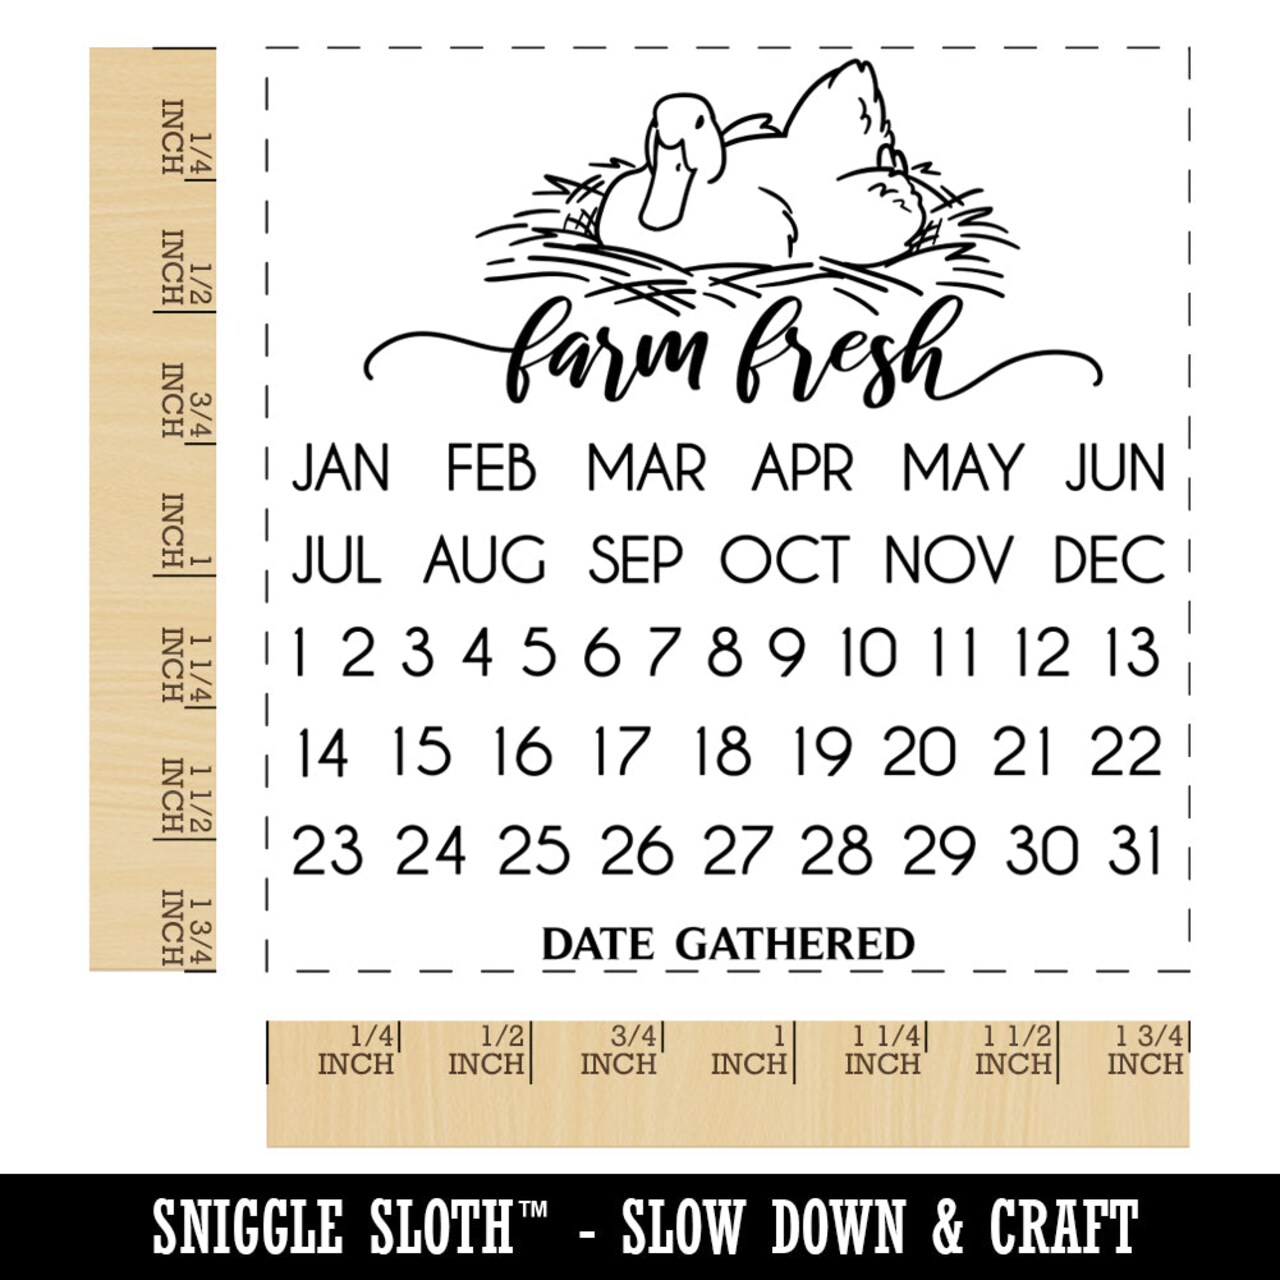 Farm Fresh Duck Egg Carton Perpetual Calendar Date Gathered Square